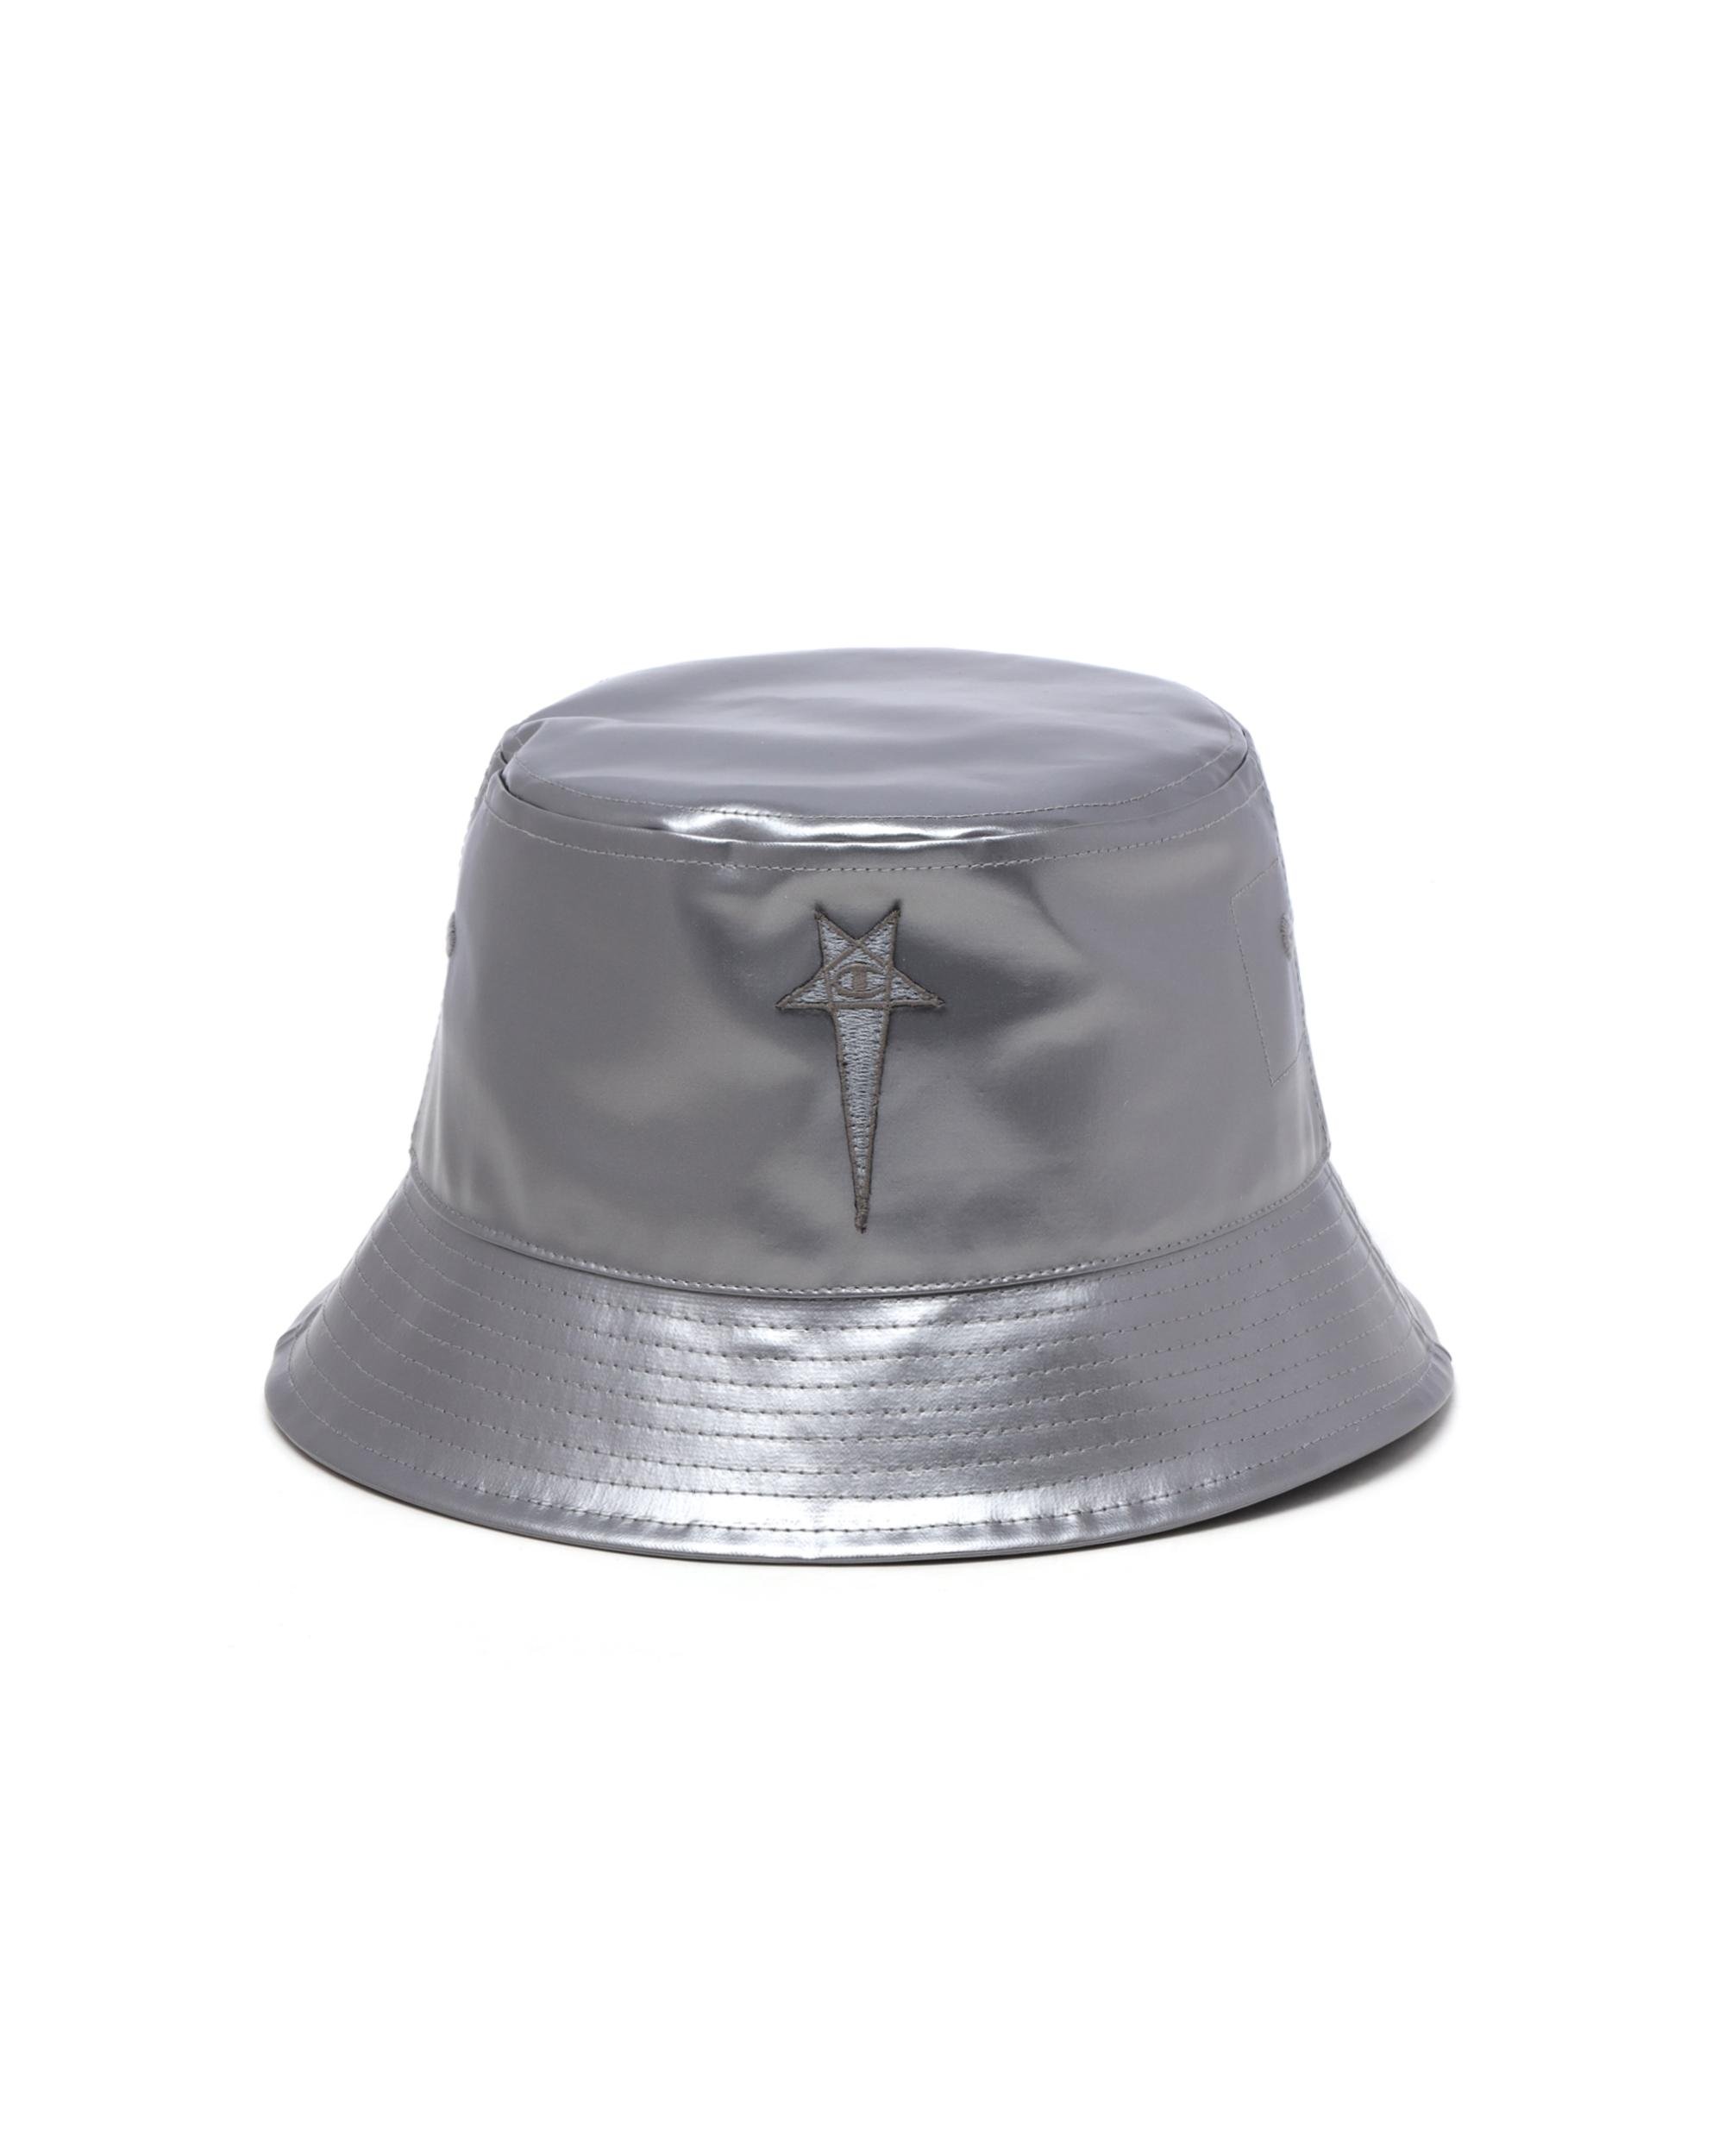 X Champion metallic logo bucket hat by RICK OWENS